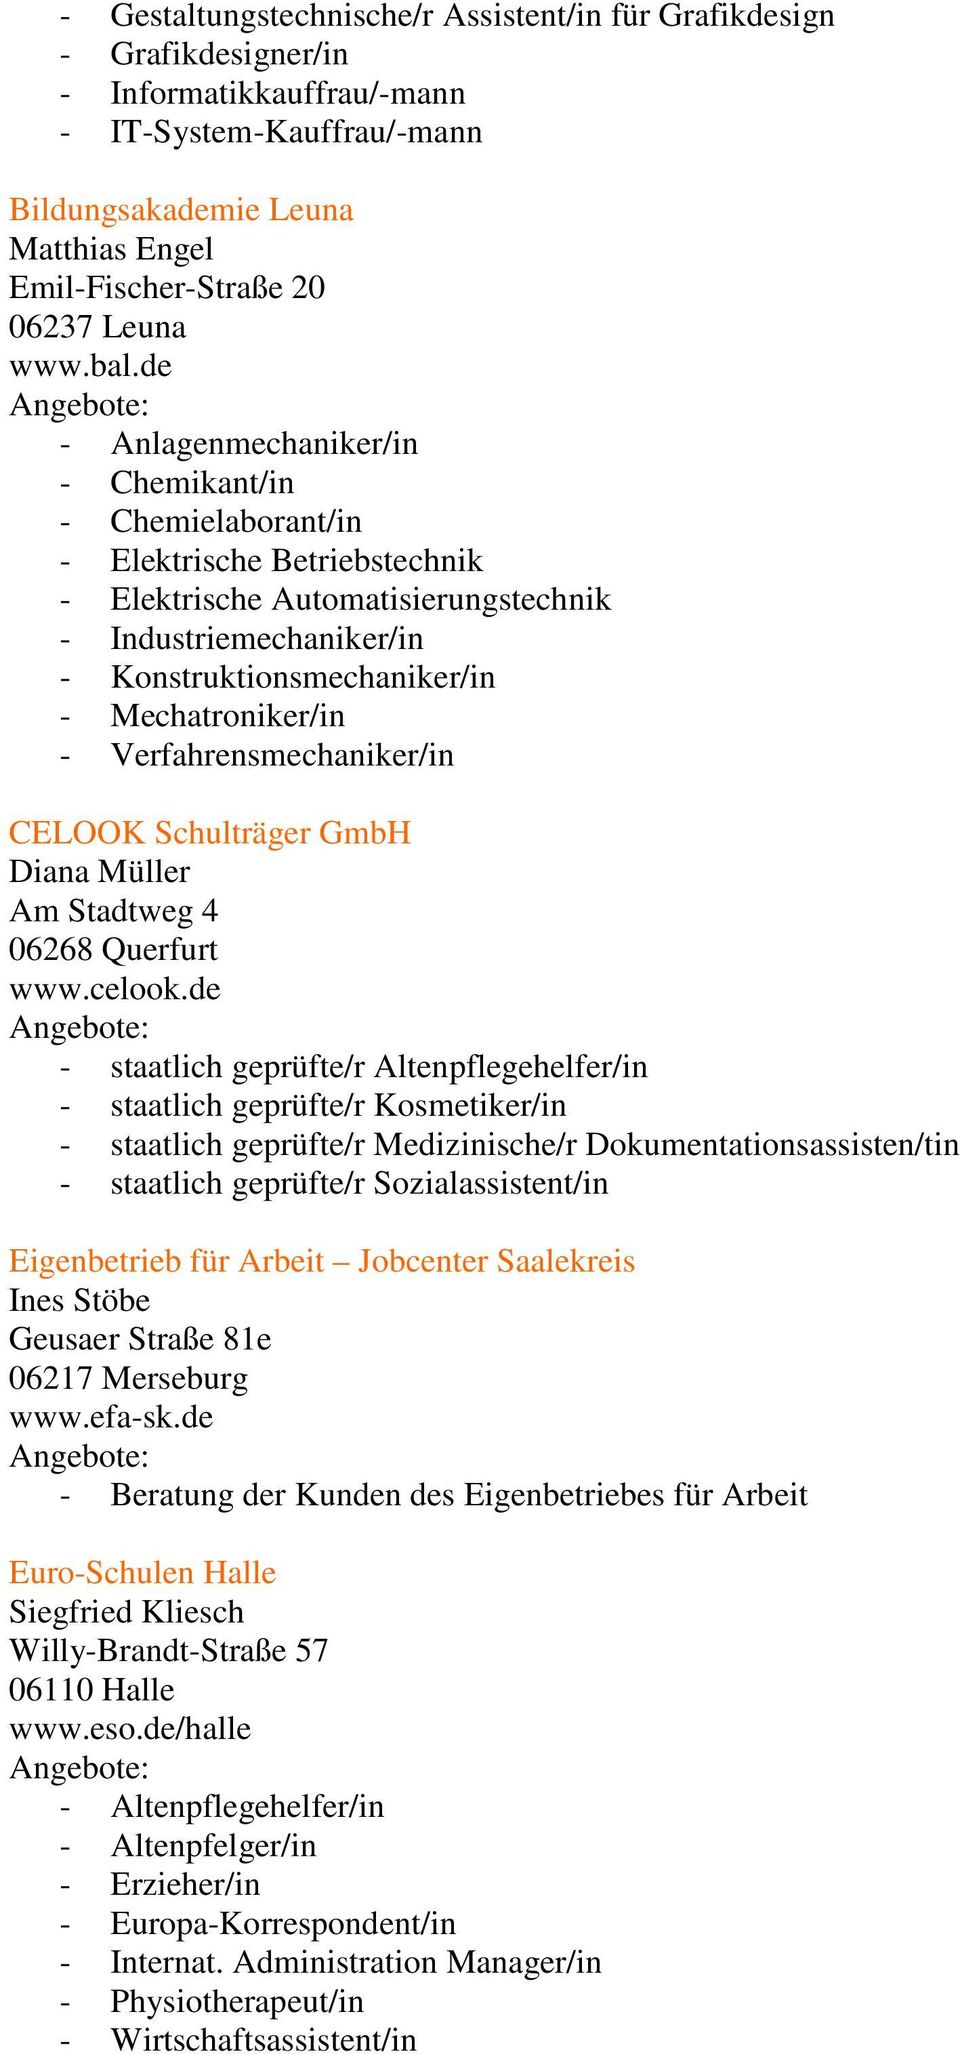 de - Chemielaborant/in - Elektrische Betriebstechnik - Elektrische Automatisierungstechnik - Konstruktionsmechaniker/in - Mechatroniker/in - Verfahrensmechaniker/in CELOOK Schulträger GmbH Diana